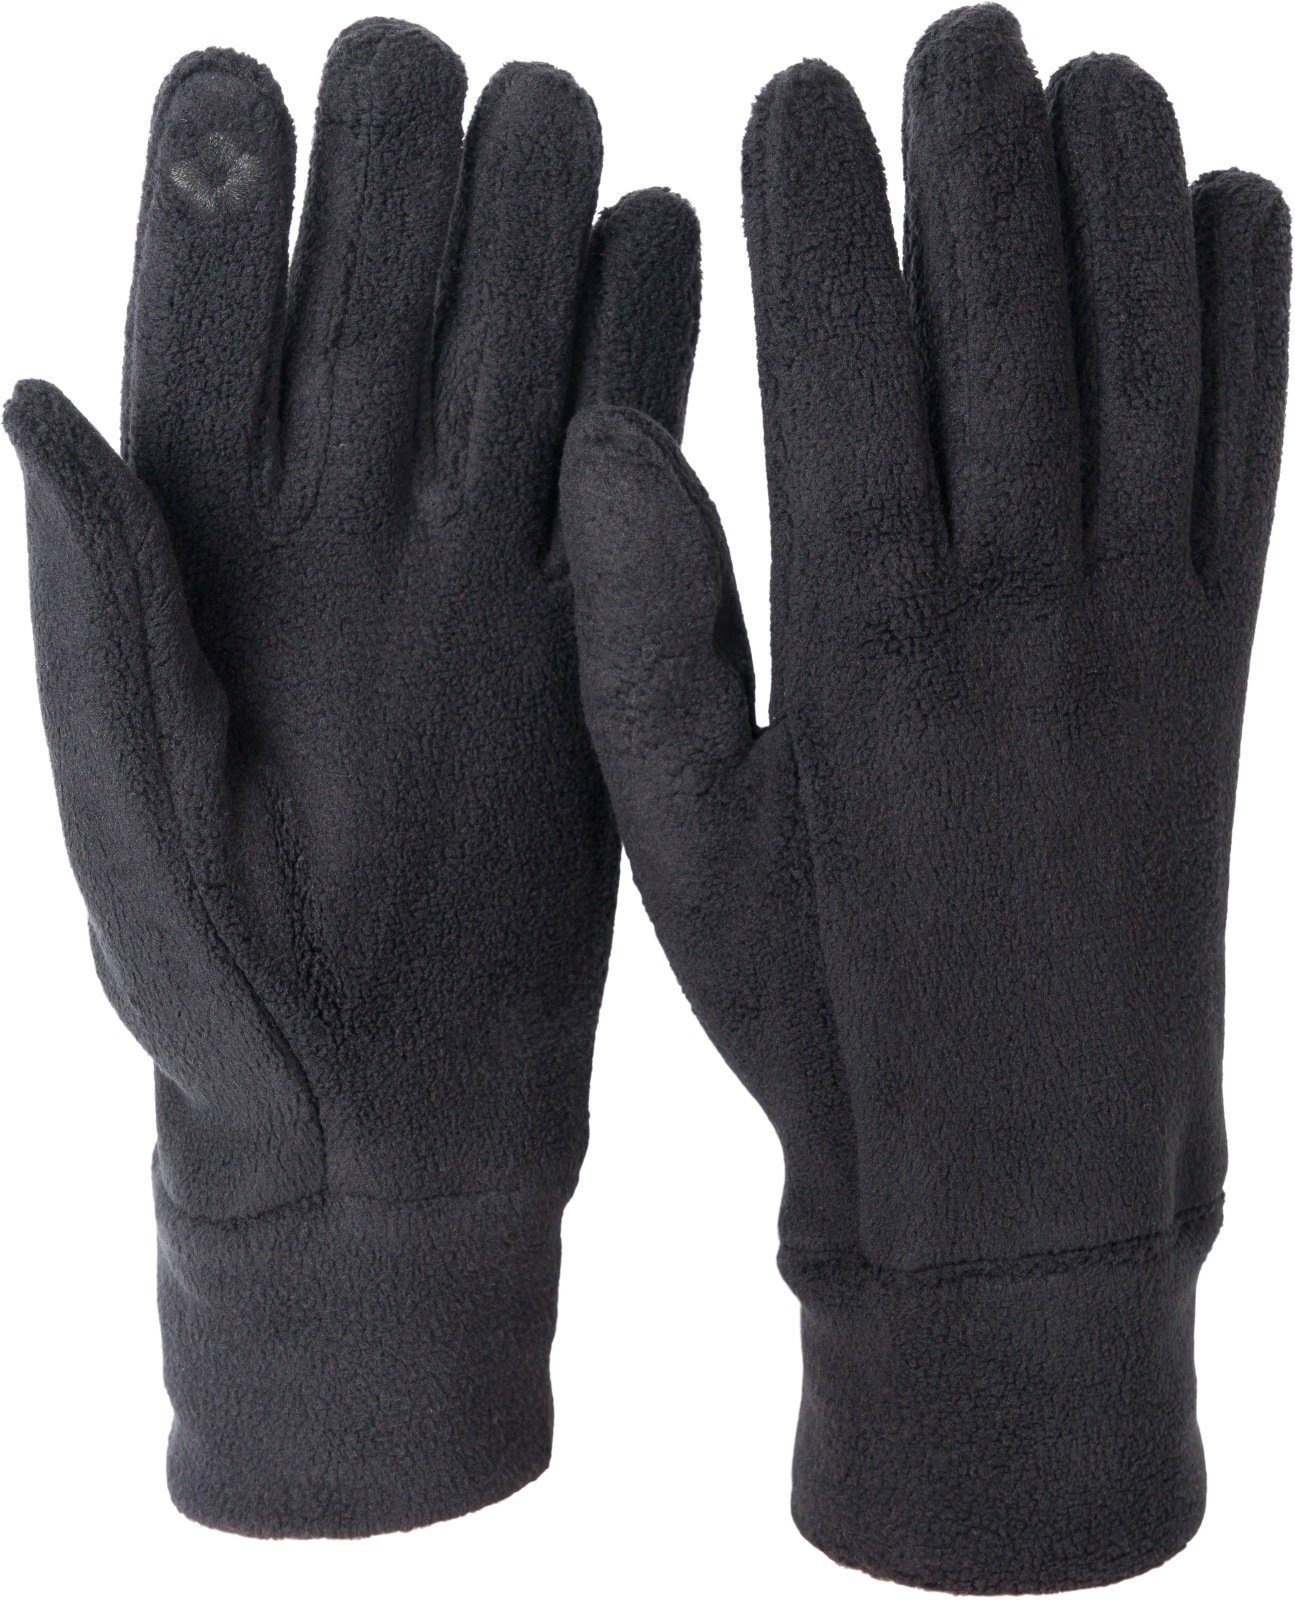 styleBREAKER Fleecehandschuhe Einfarbige Touchscreen Fleece Handschuhe